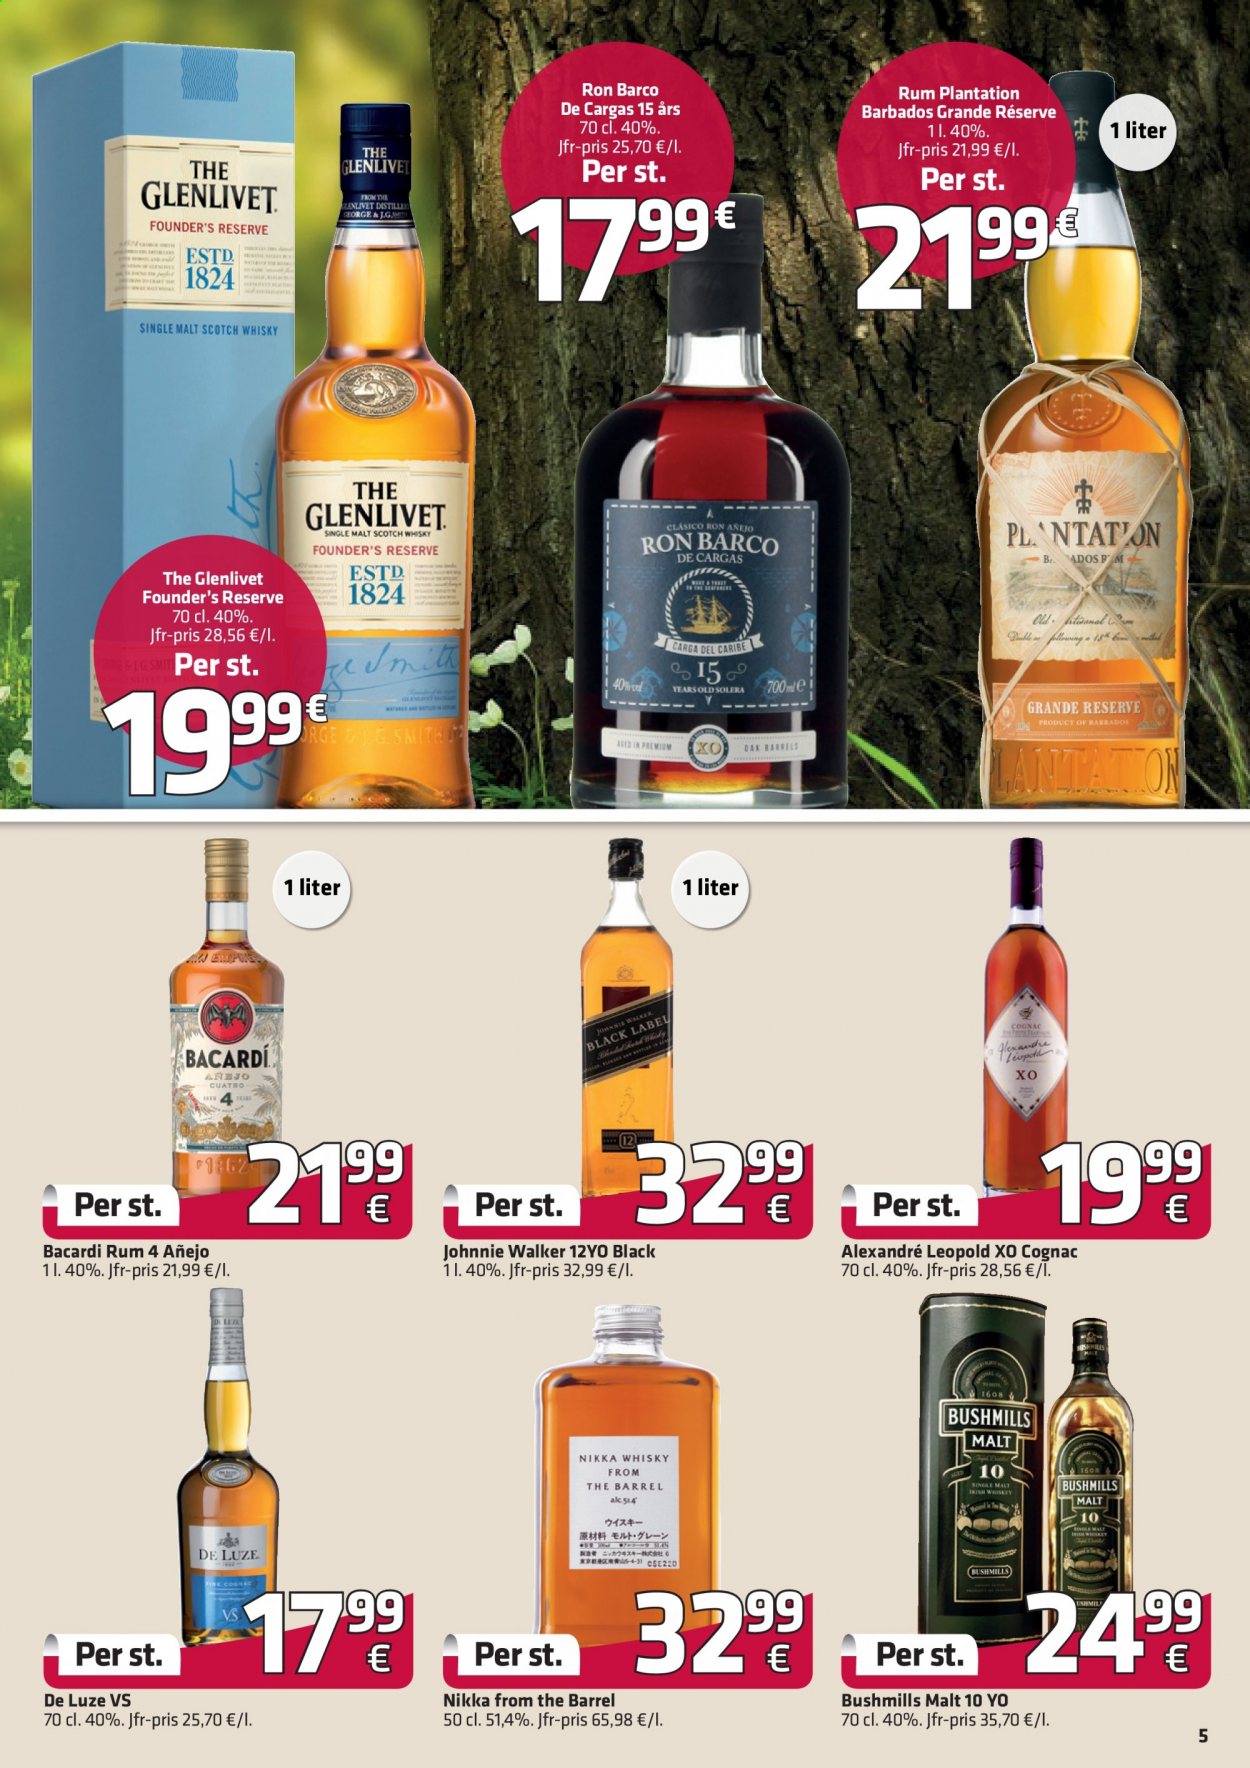 thumbnail - Fleggaard reklamblad - 24/3 2021 - 27/4 2021 - varor från reklamblad - whisky, Bacardi, Bushmills, cognac, rum, Plantation, scotch whisky, Glenlivet, Johnnie Walker, Irish Whiskey, Scotch. Sida 6.